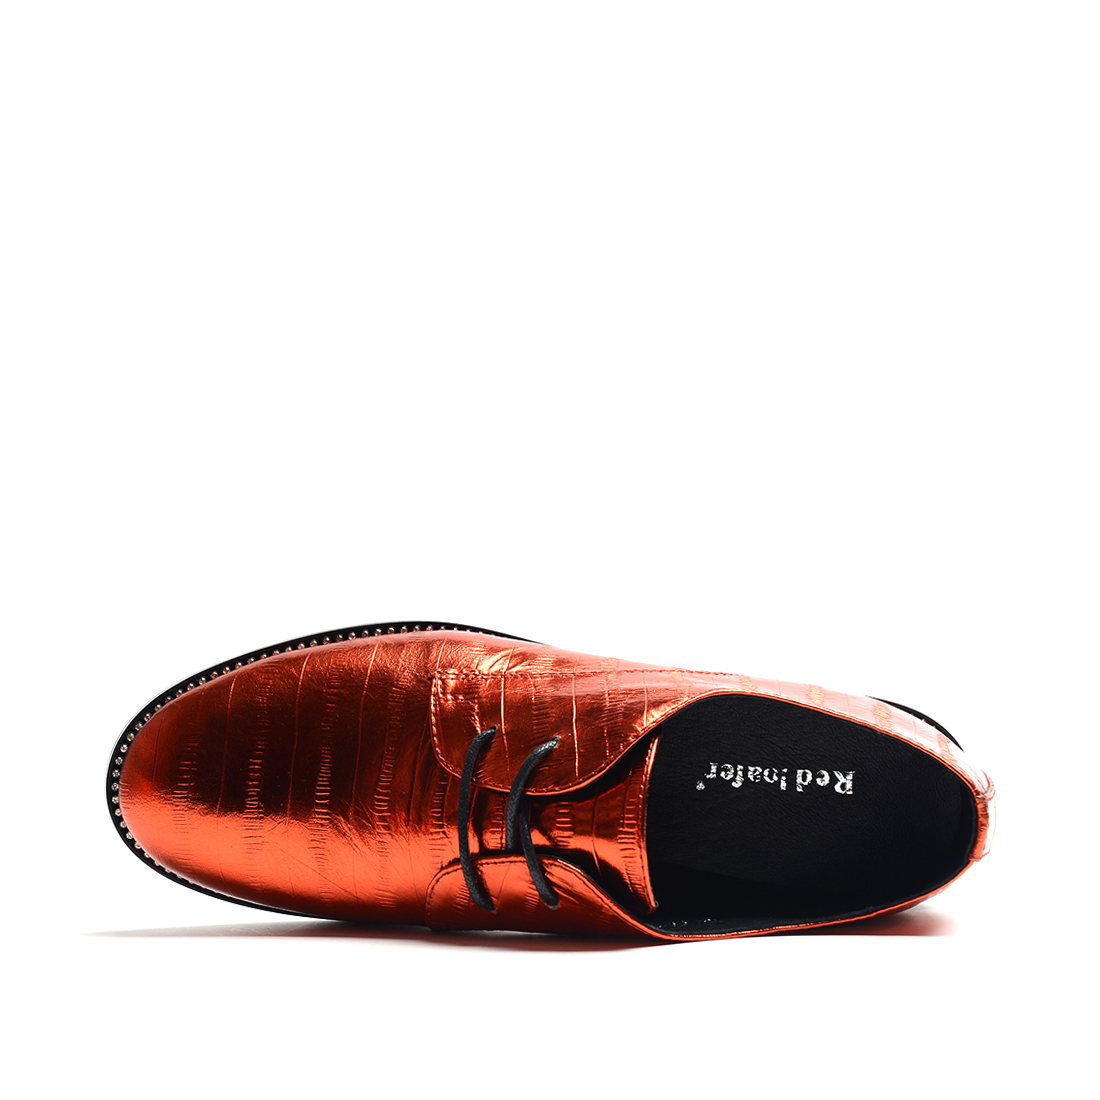 [RedLoafer]欧美风水钻羊皮革单鞋(尺码标准)
编号：A3856D1A76